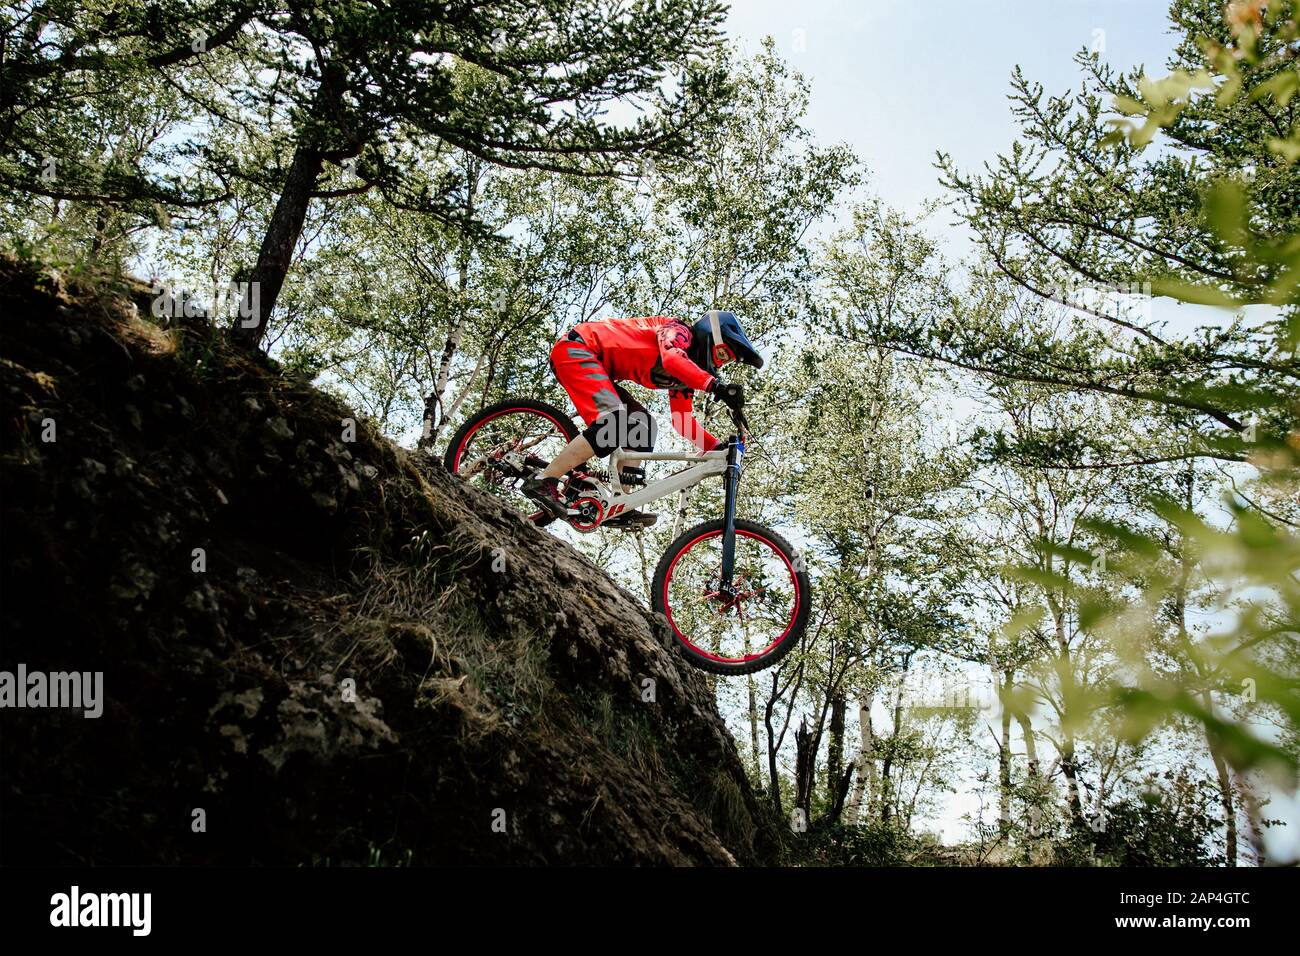 ragazza atleta rider discesa mountain bike. giù montagna in sentiero foresta Foto Stock